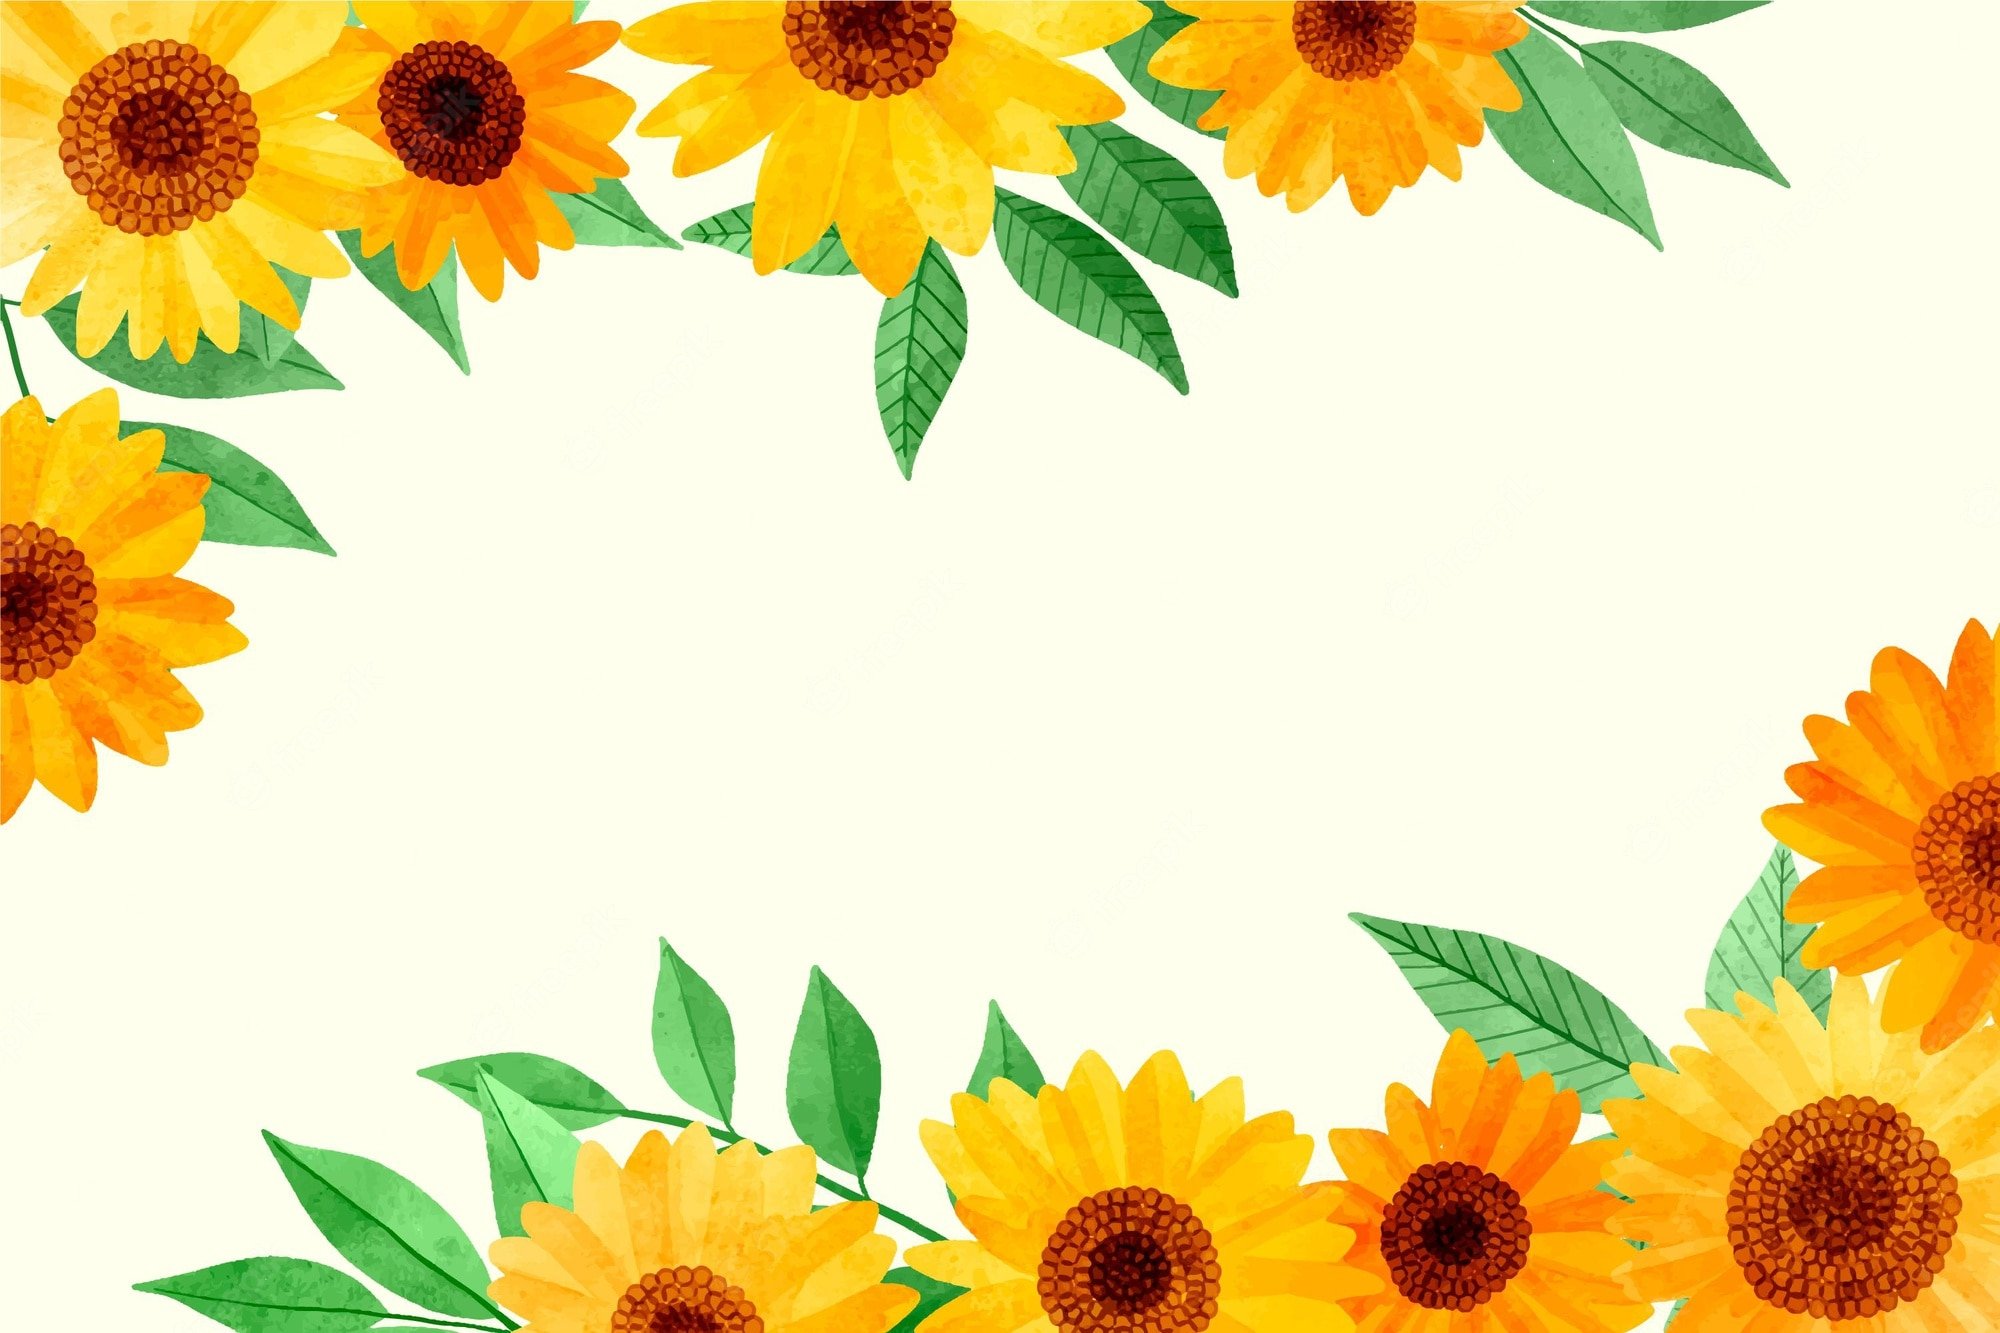 Sunflower wallpaper Vectors & Illustrations for Free Download